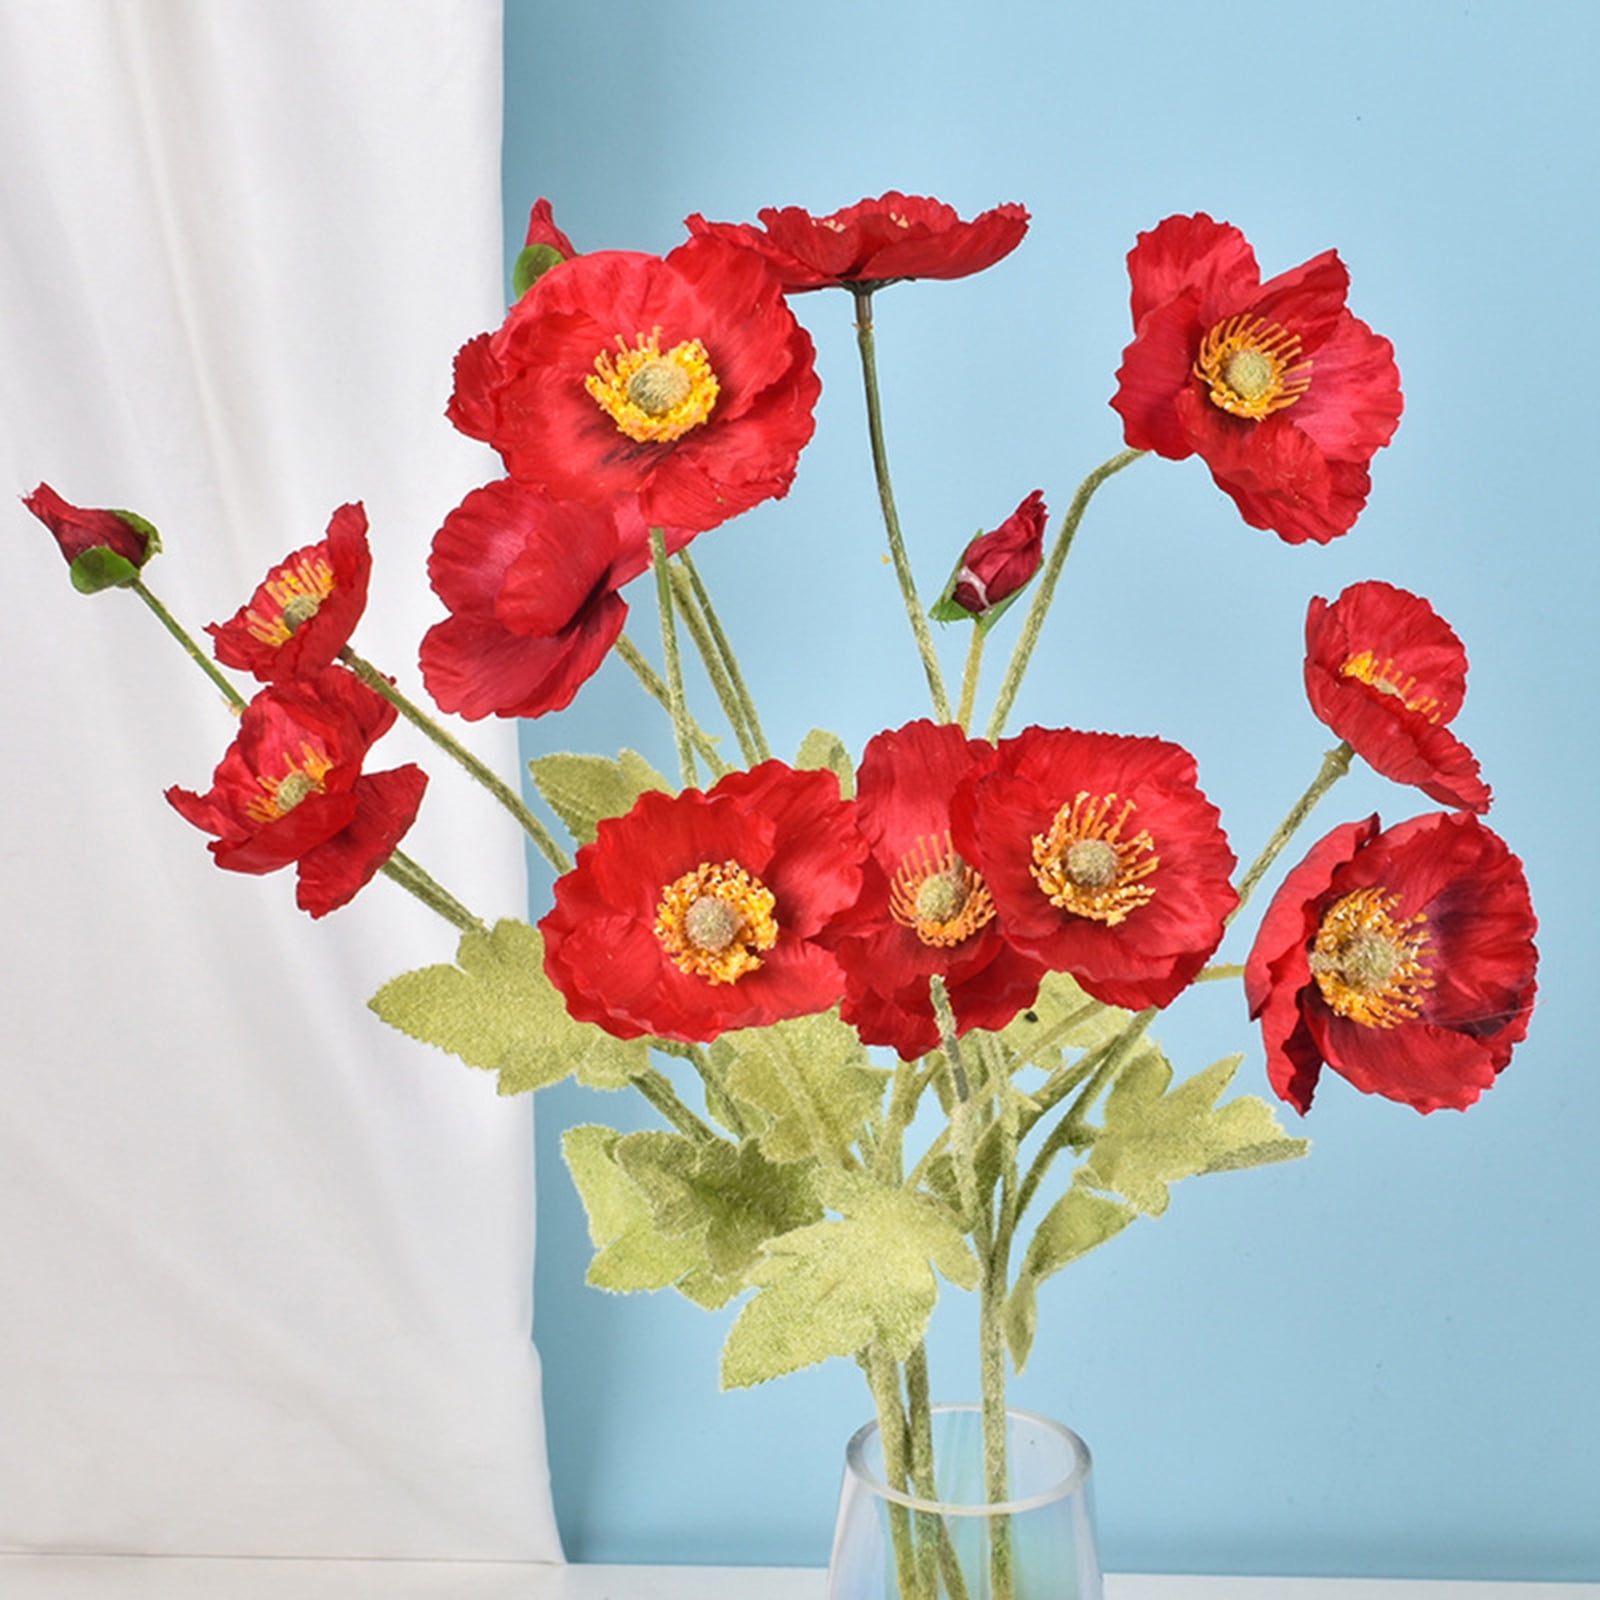 Artificial Poppy Flowers Decorative Silk Flowers Wedding Party Home Decor x 1 Pc